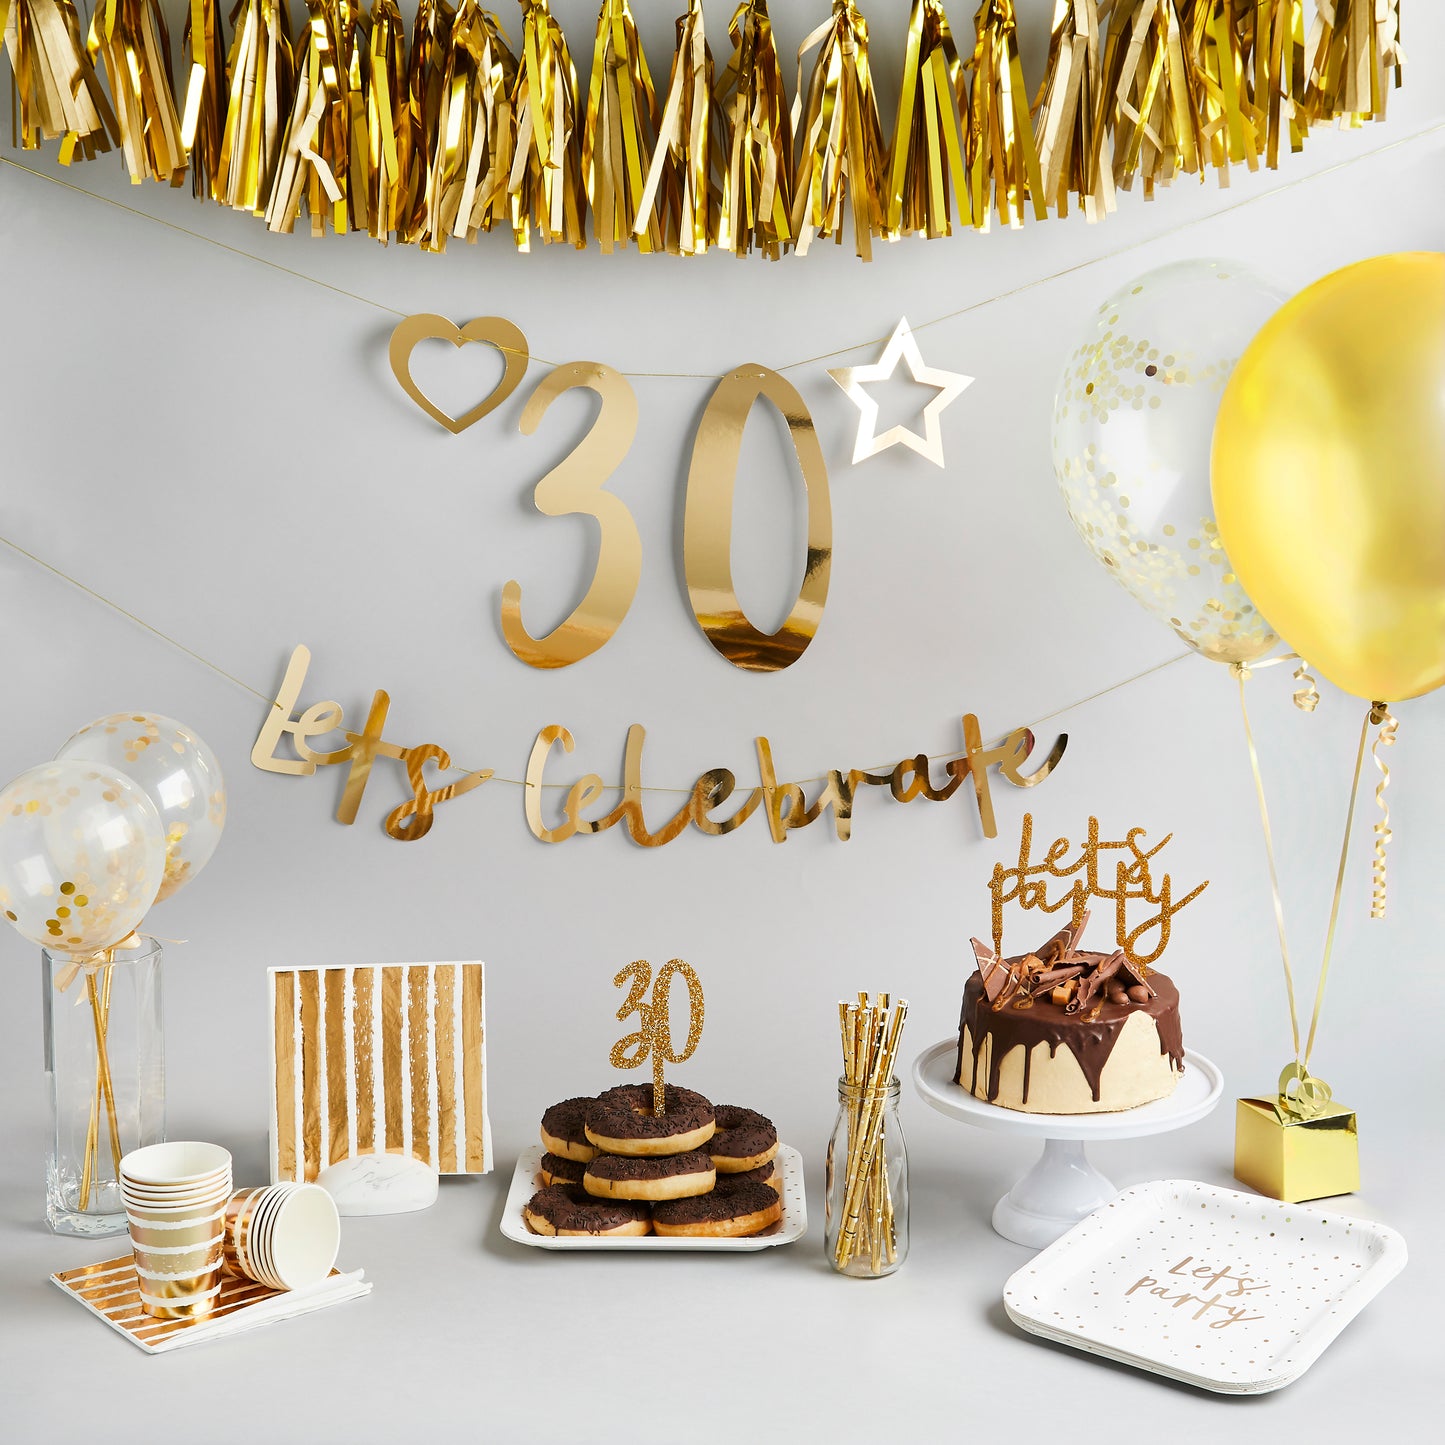 Hootyballoo Gold 'Happy Birthday' 16" Foil Balloon Garland Birthday Banner